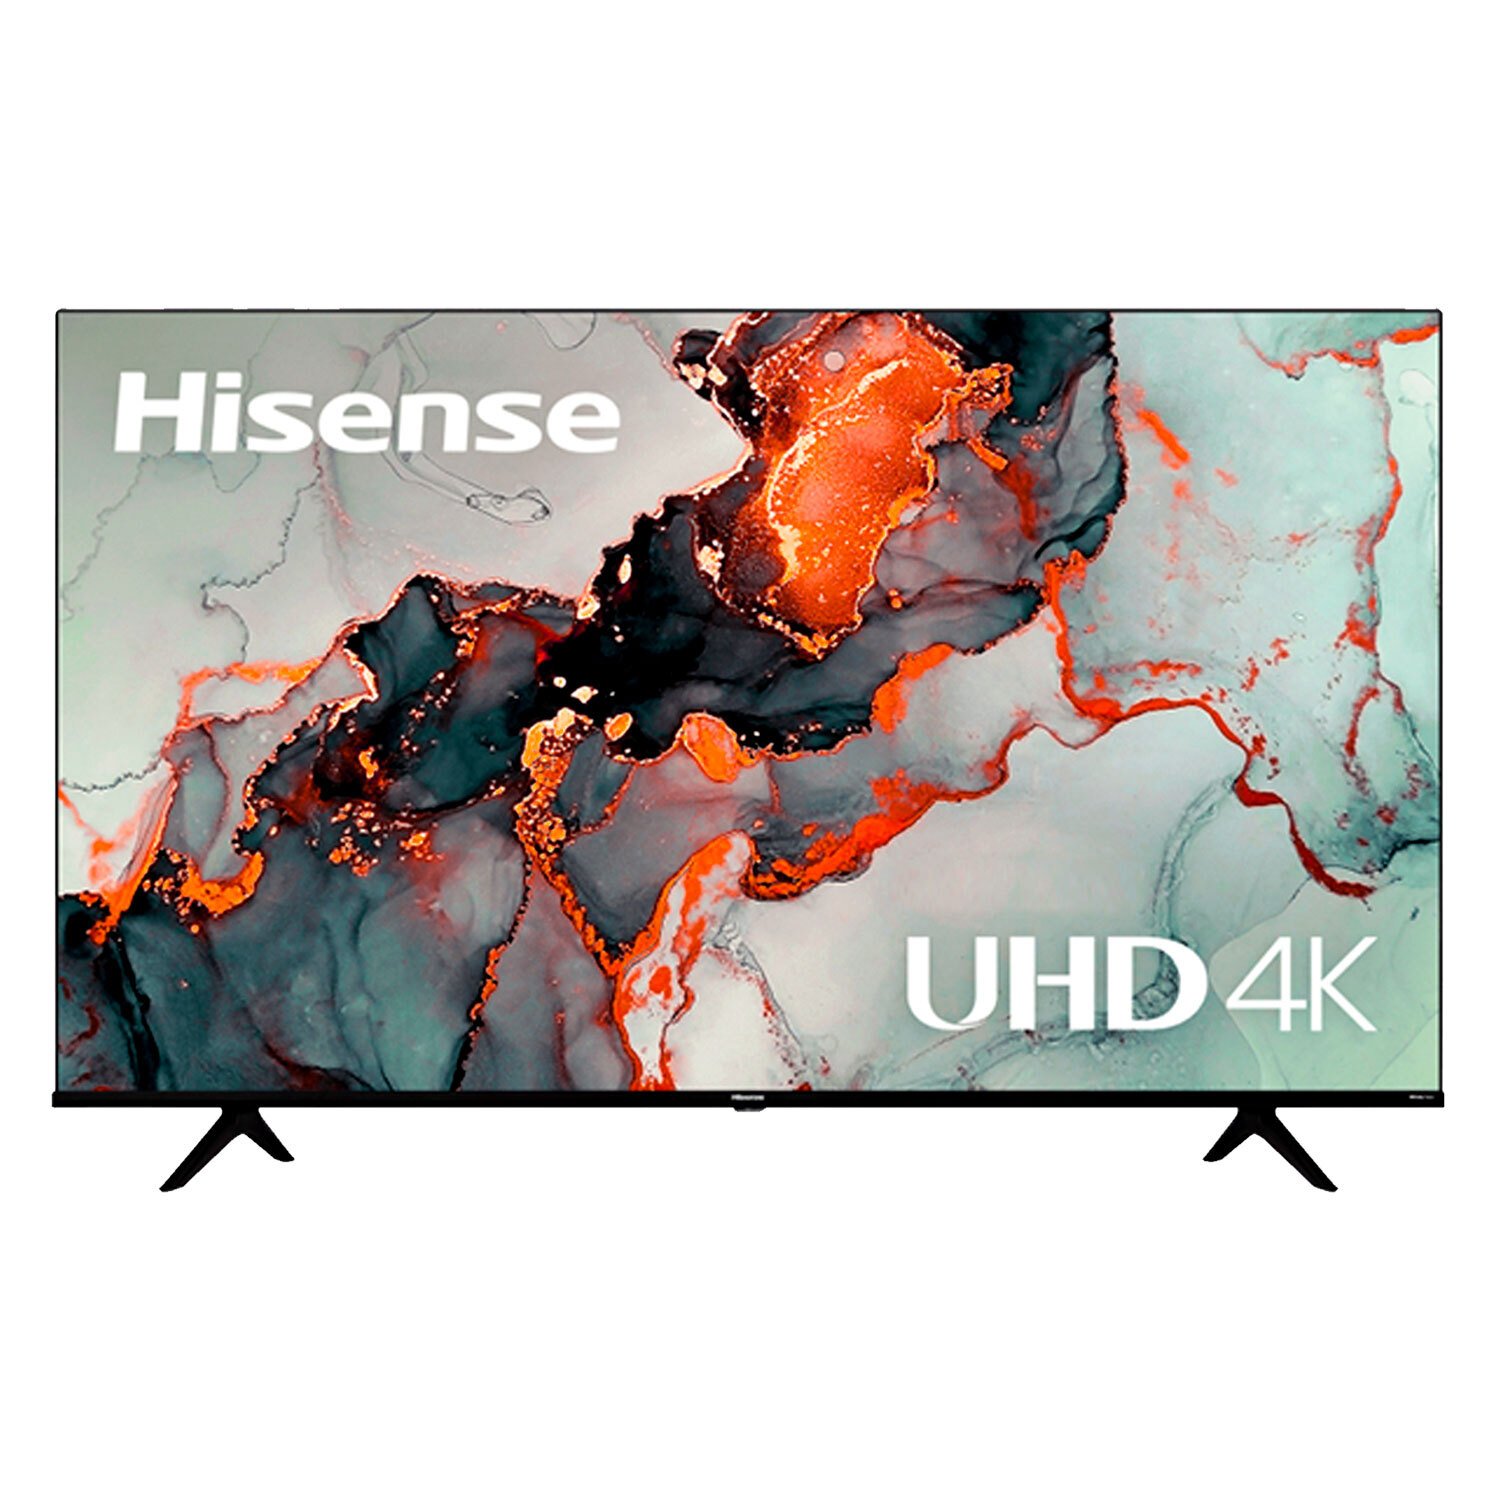 Hisense 50" 4k Smart UHD TV A6H